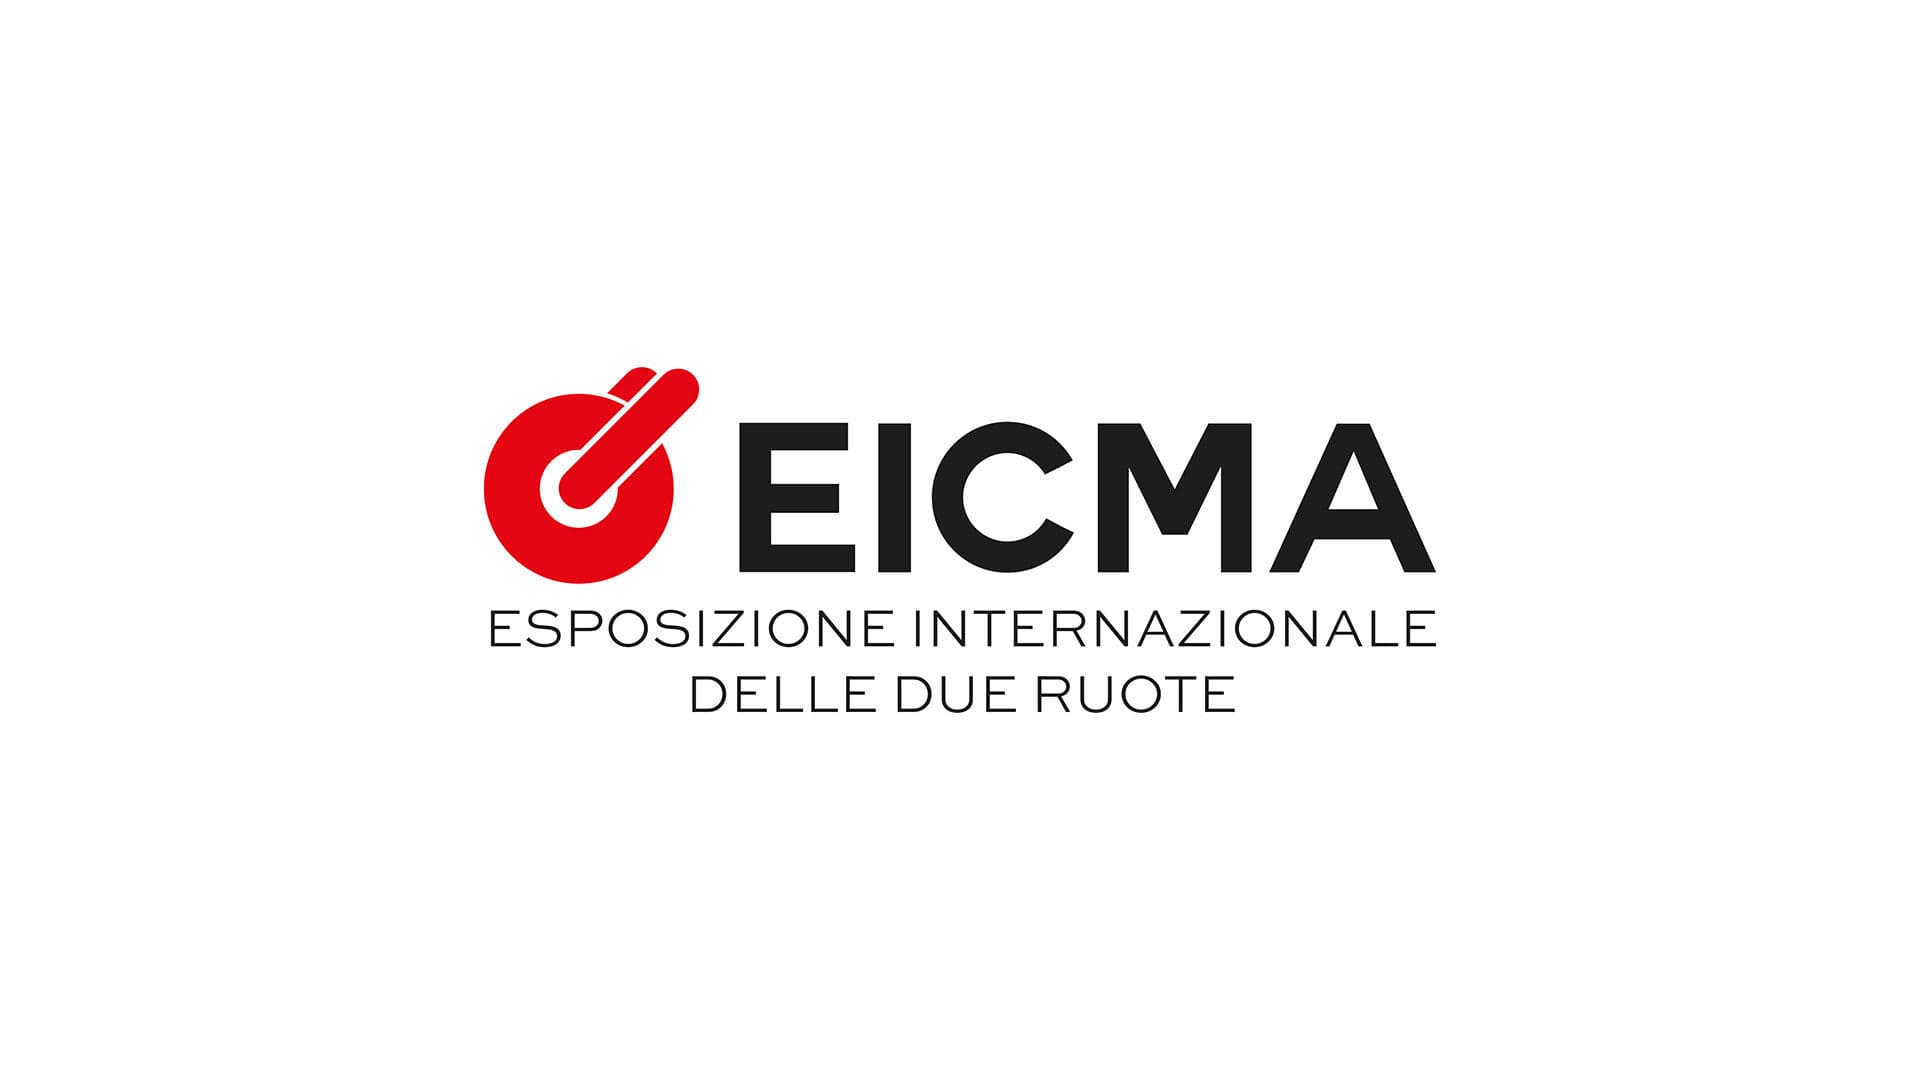 EICMA announces the rebranding